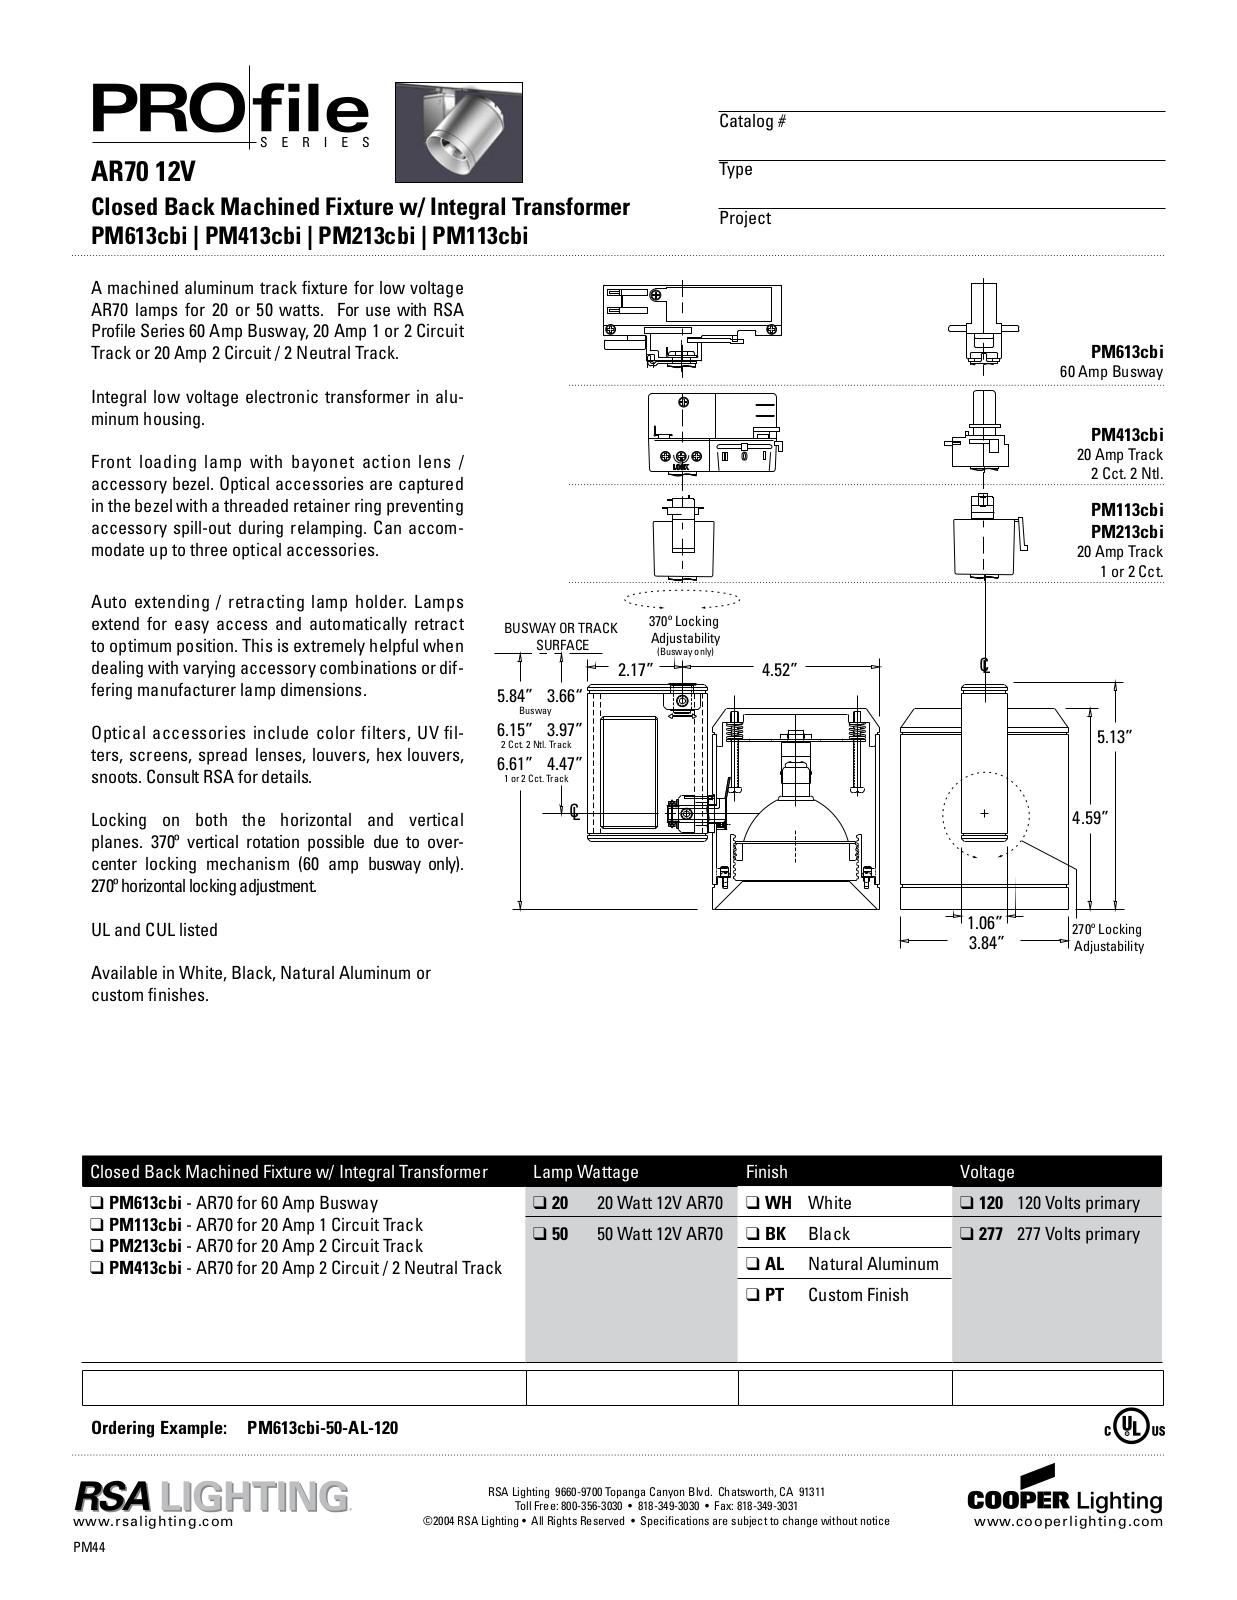 Cooper Lighting PM113cbi, PM613cbi, PM213cbi, PM413cbi User Manual